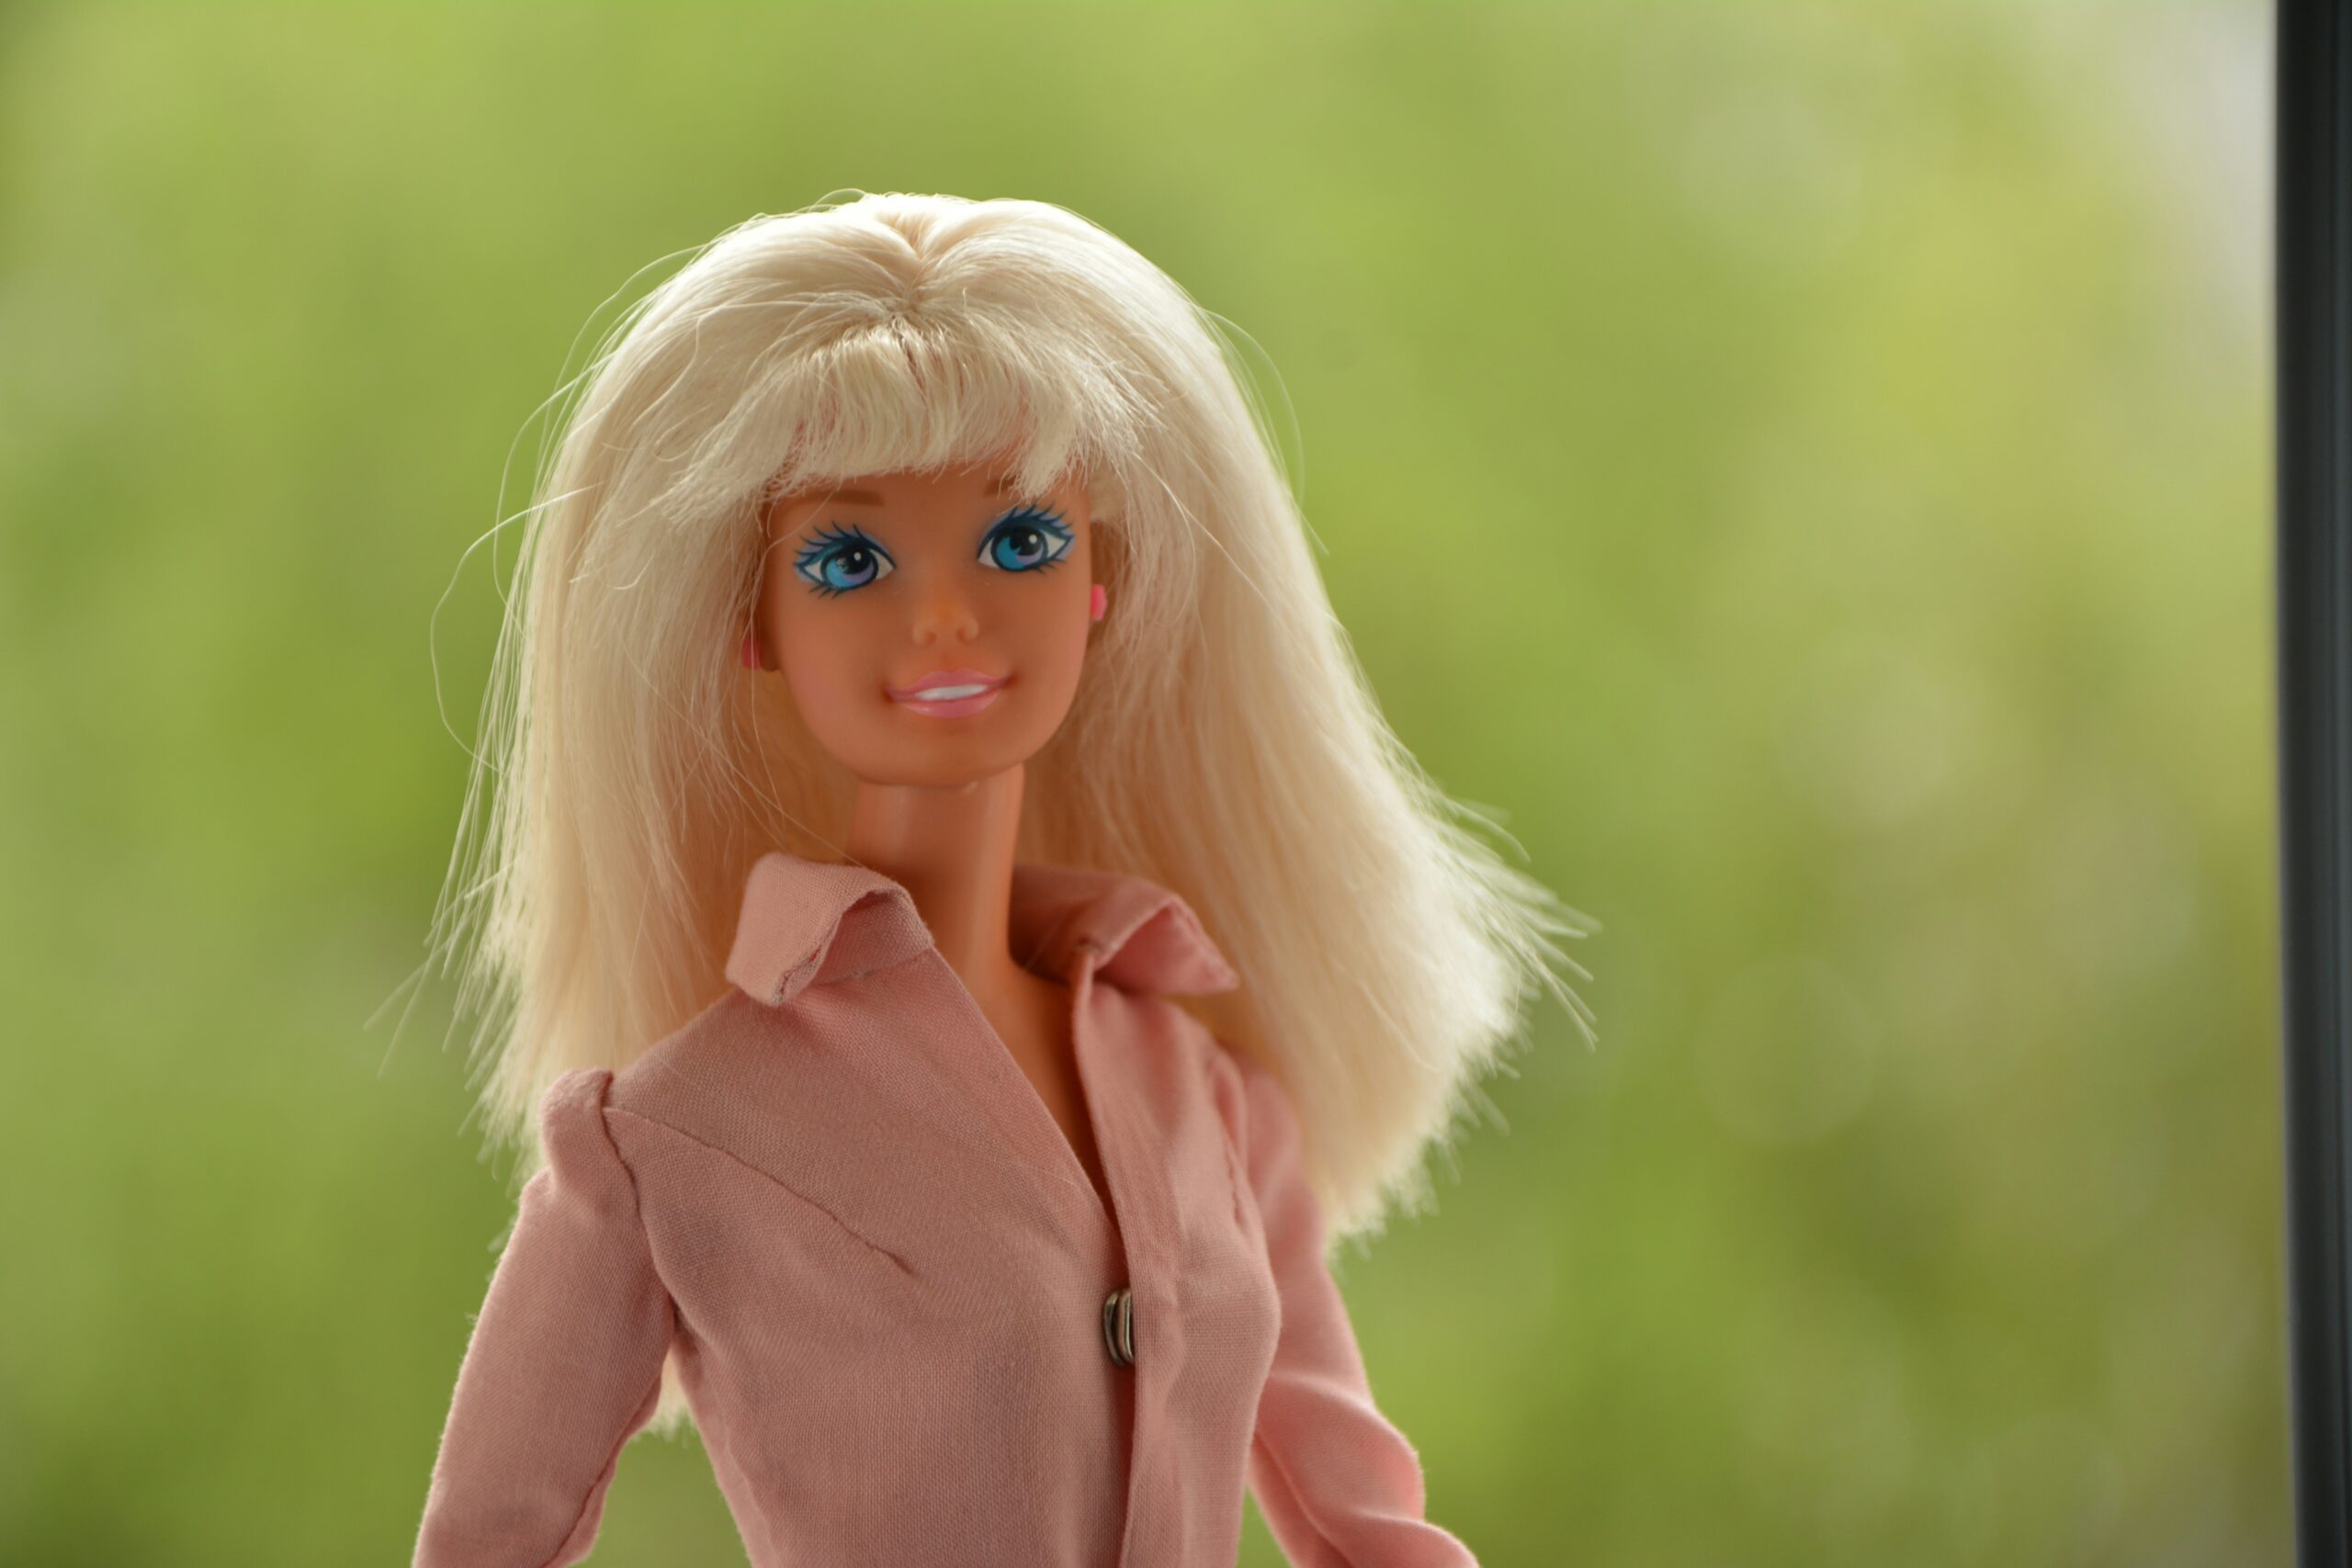 Final Words on Barbie Merchandise